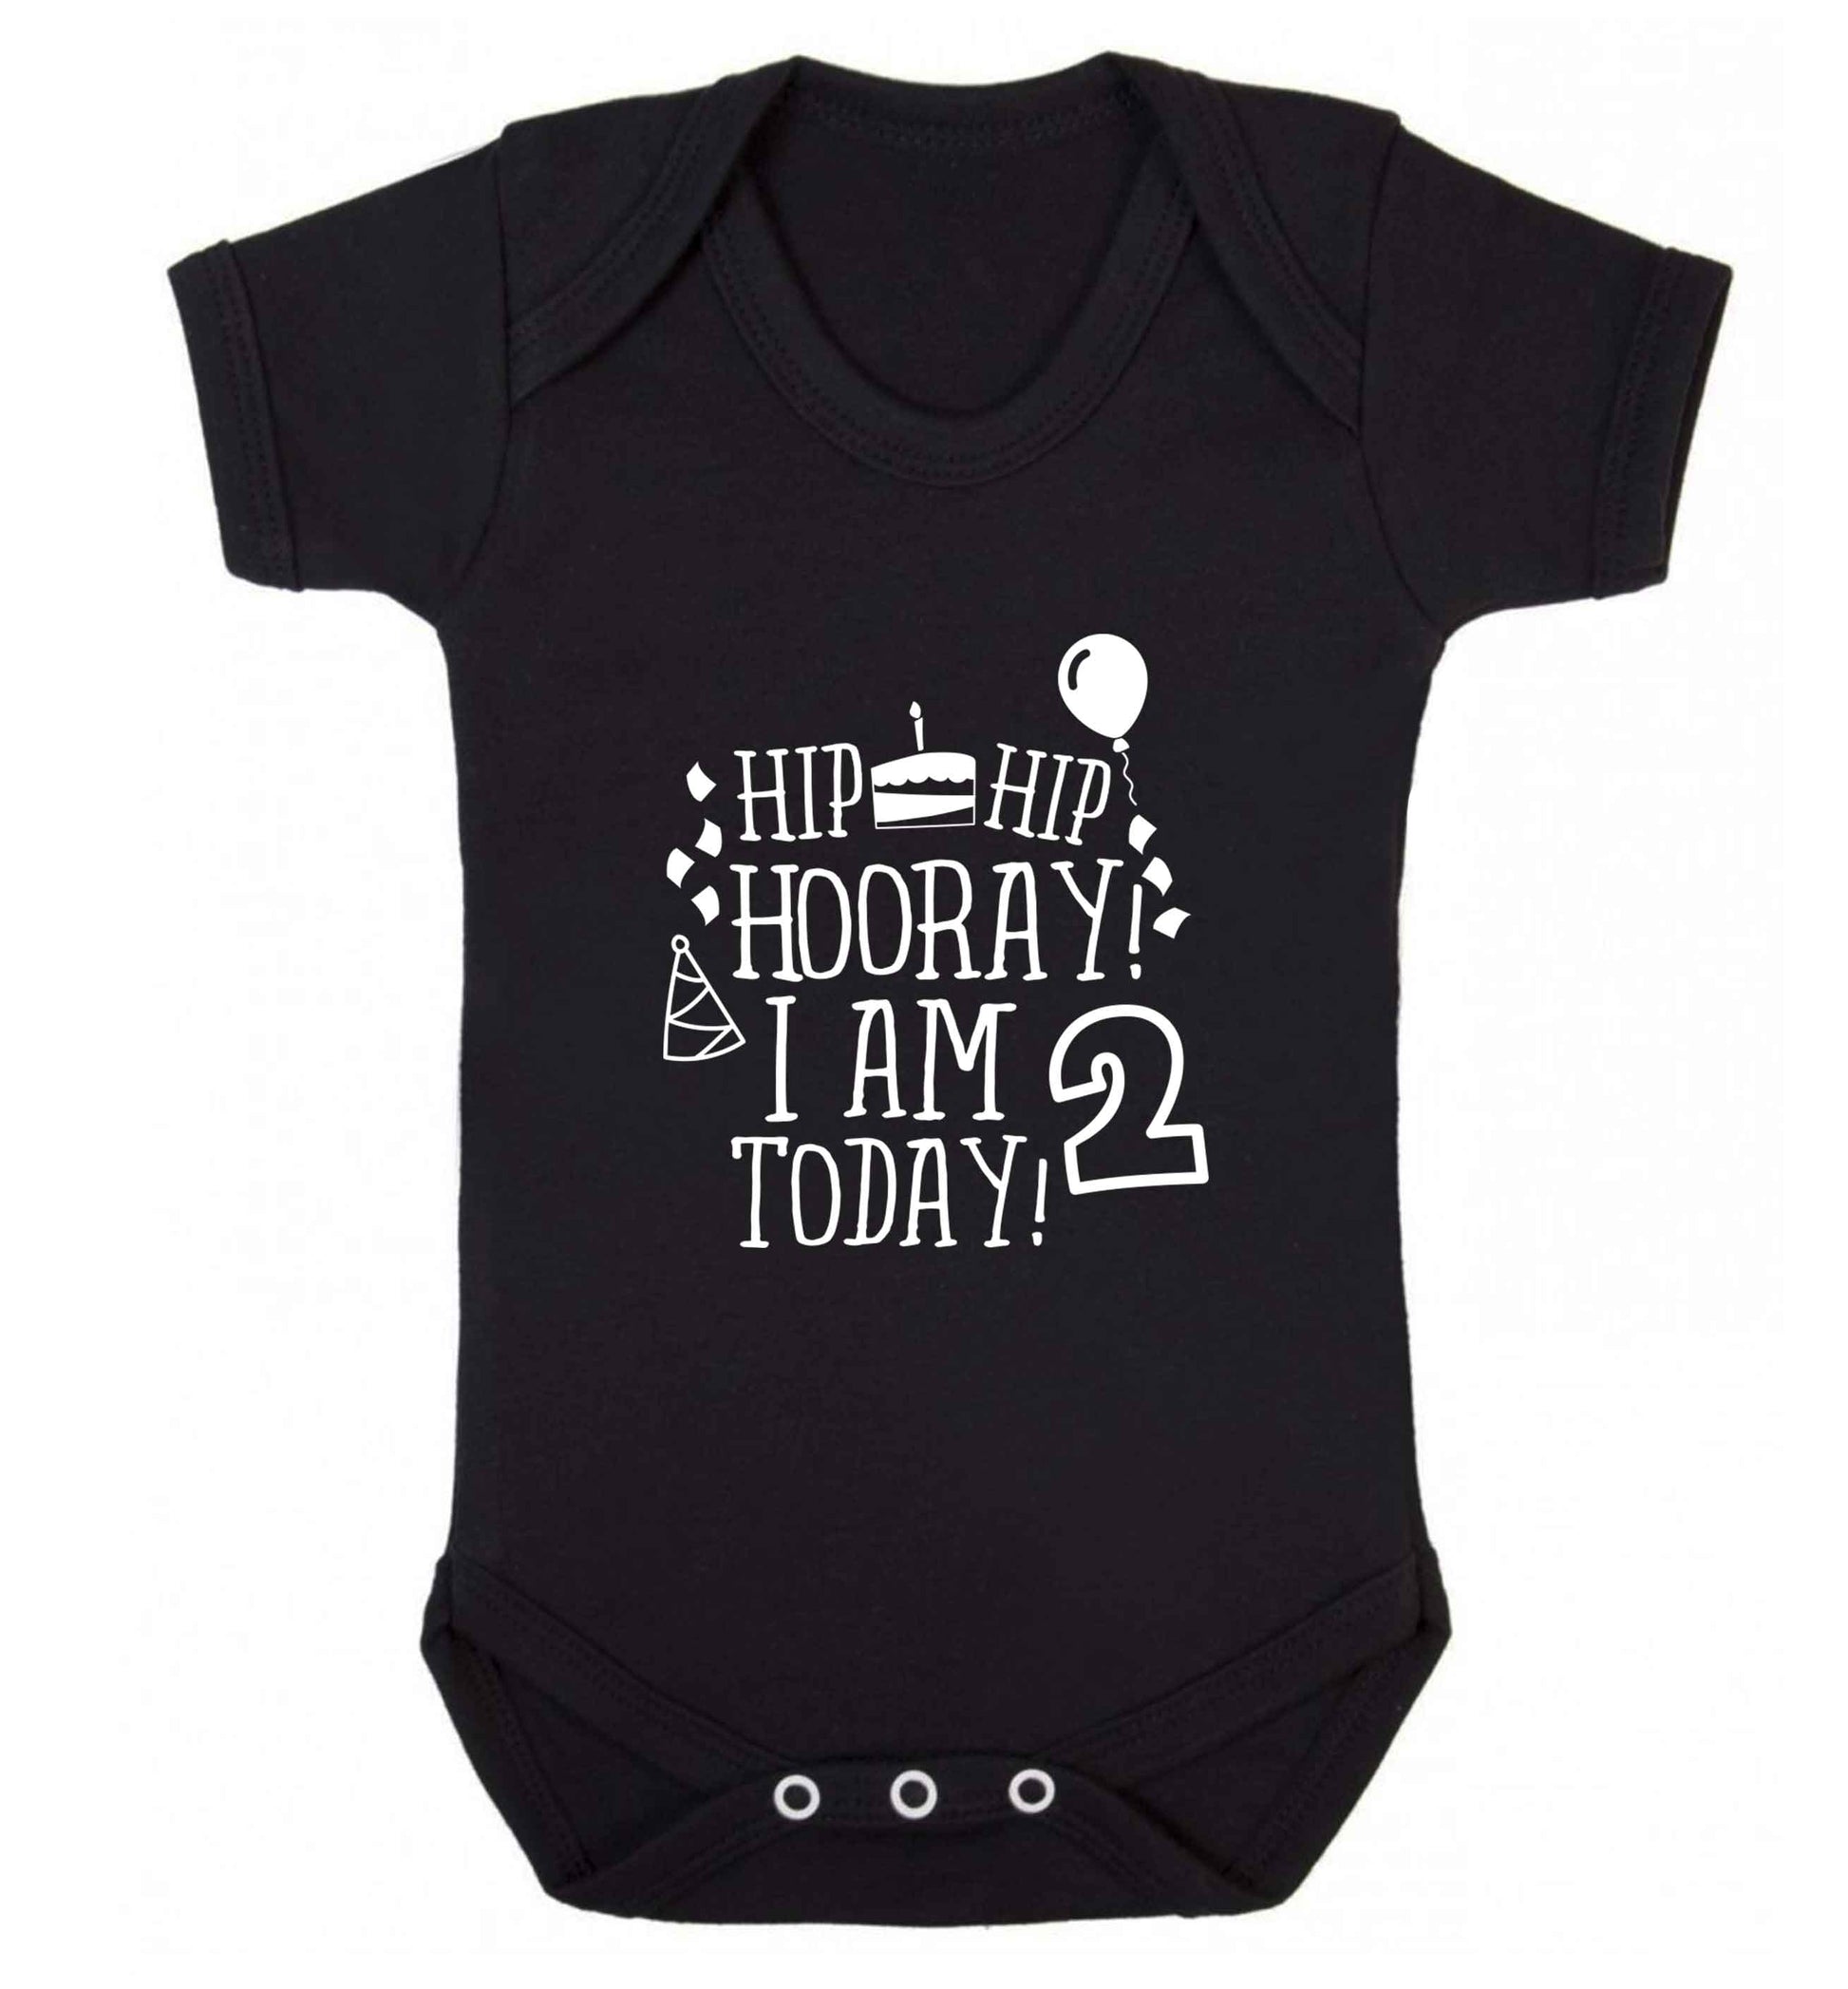 I'm 2 Today baby vest black 18-24 months